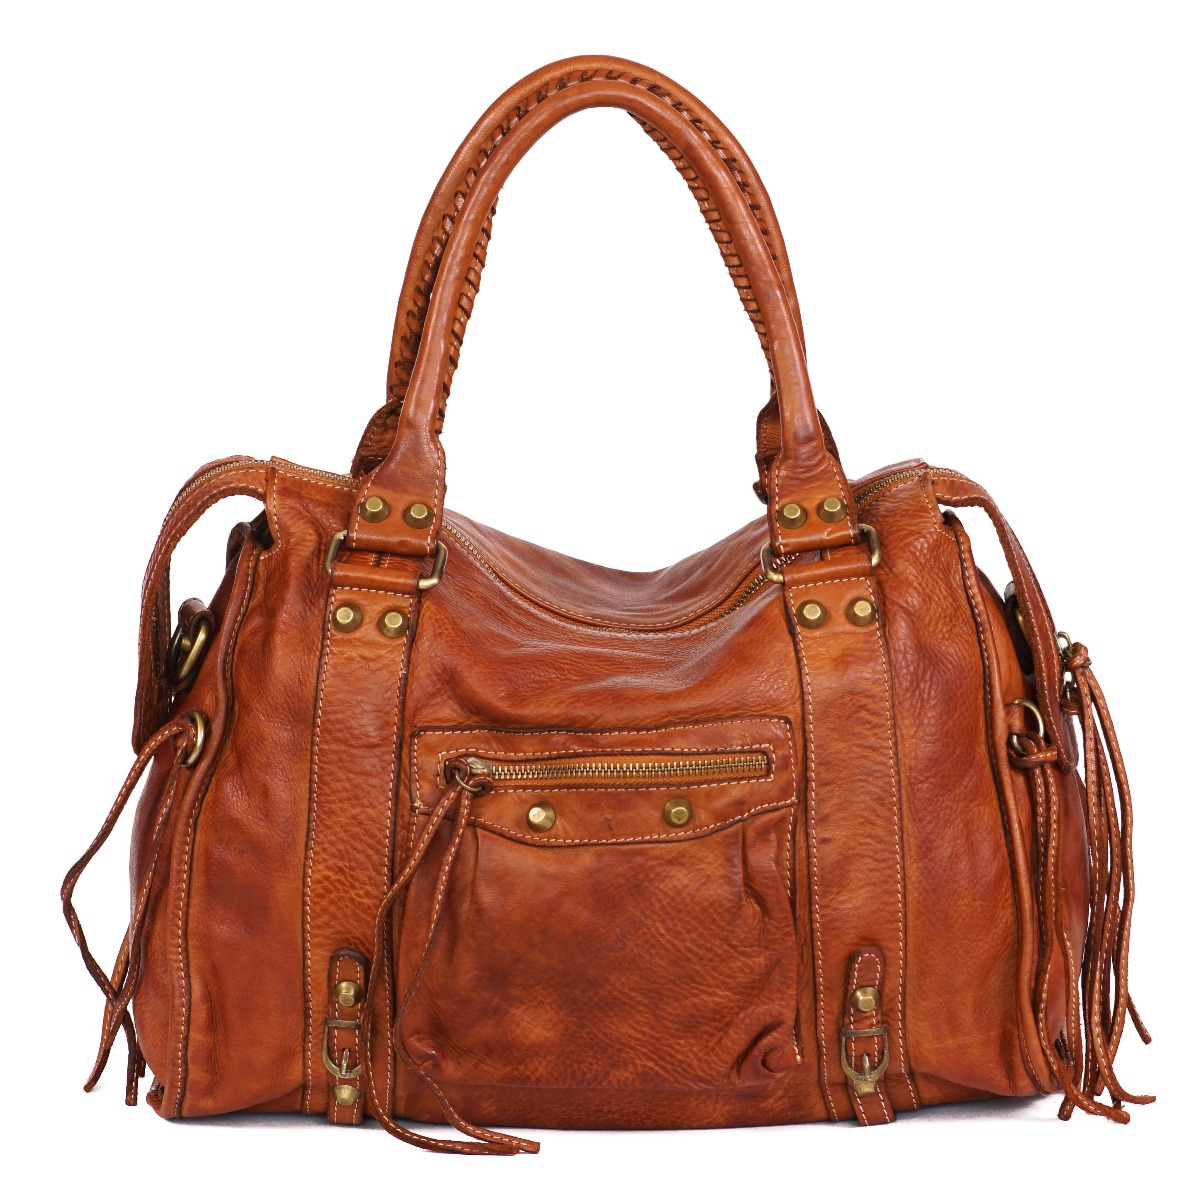 Women soft leather vintage handbag